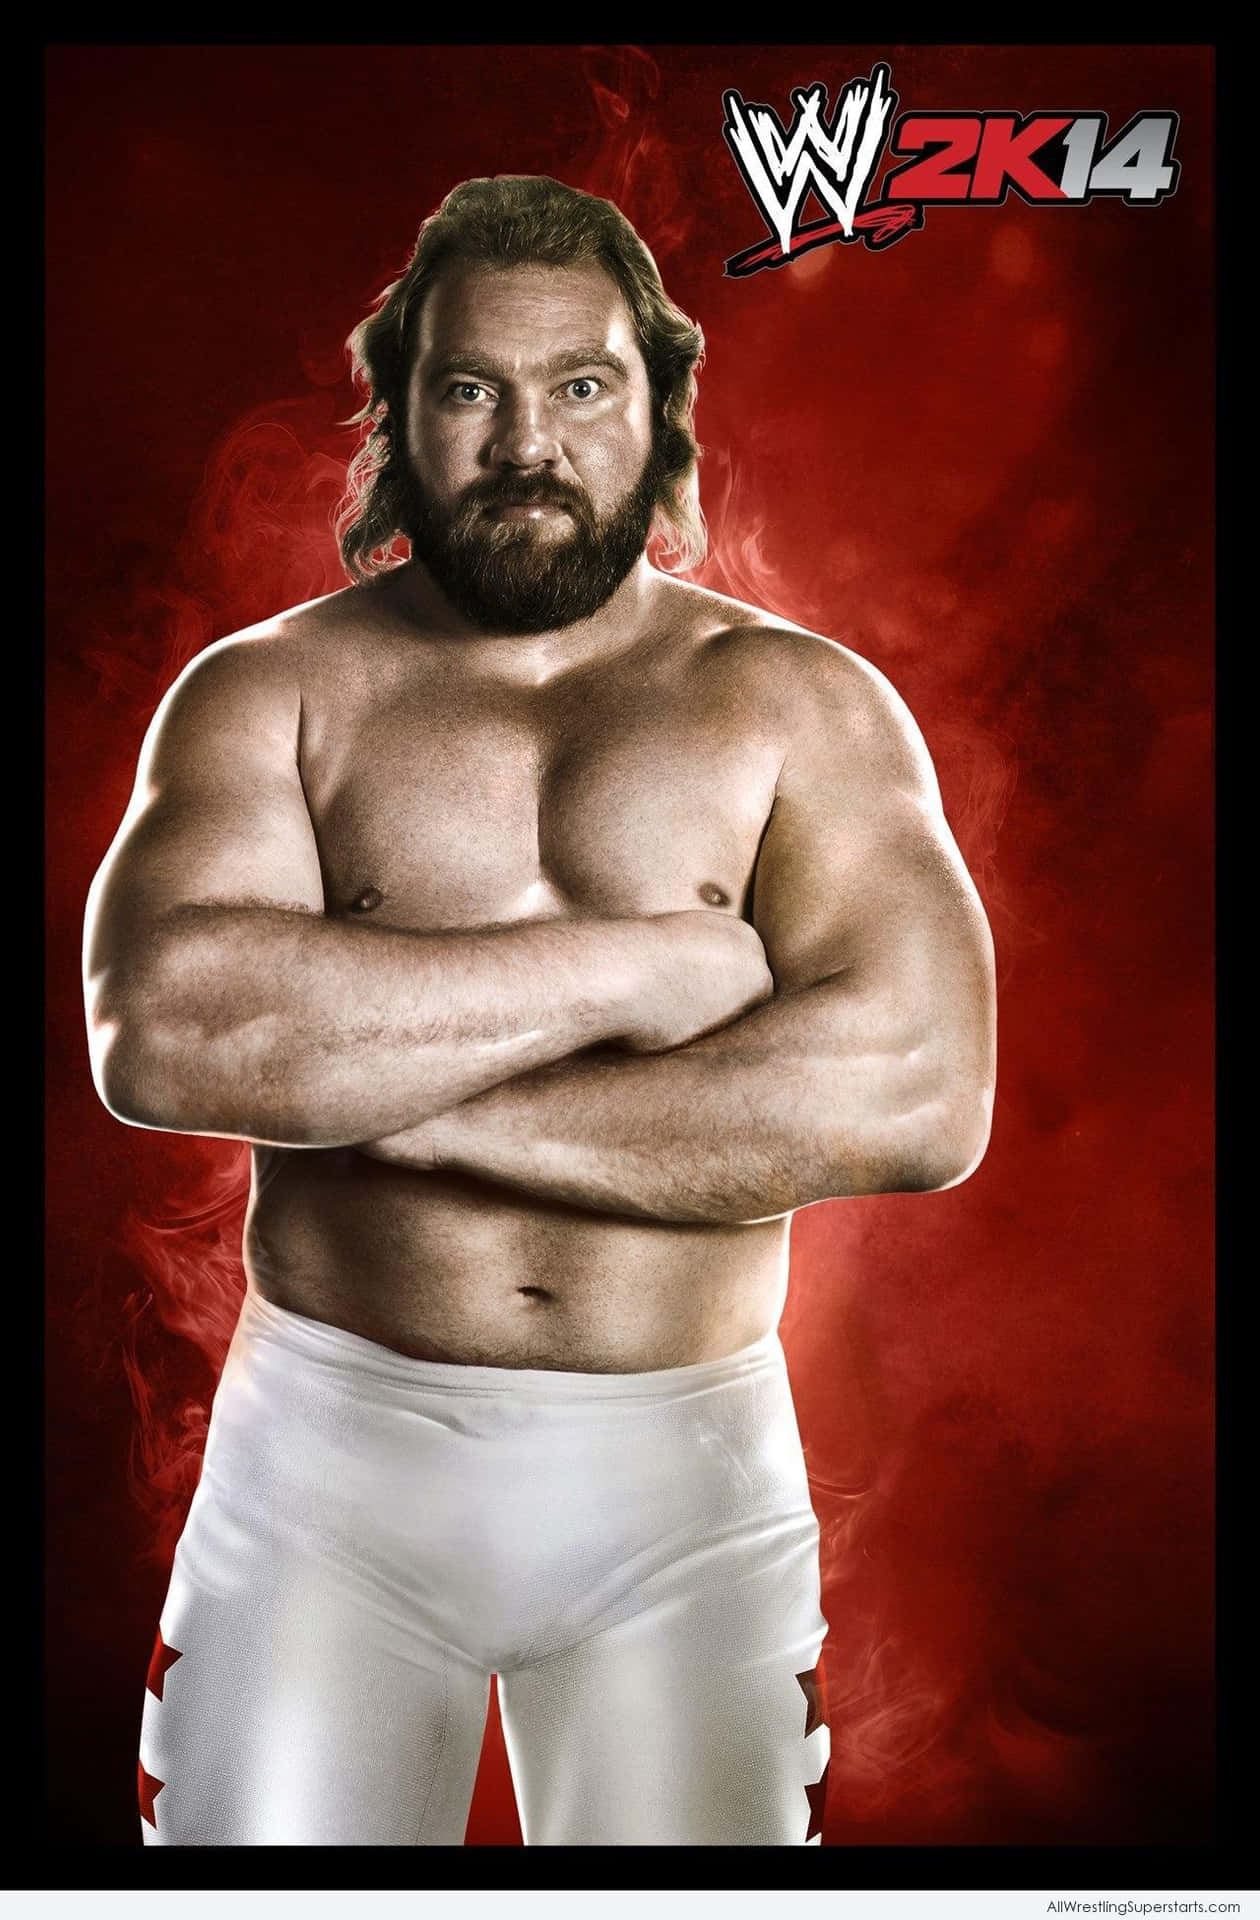 Big John Studd In WWE 2k14 Video Game Wallpaper